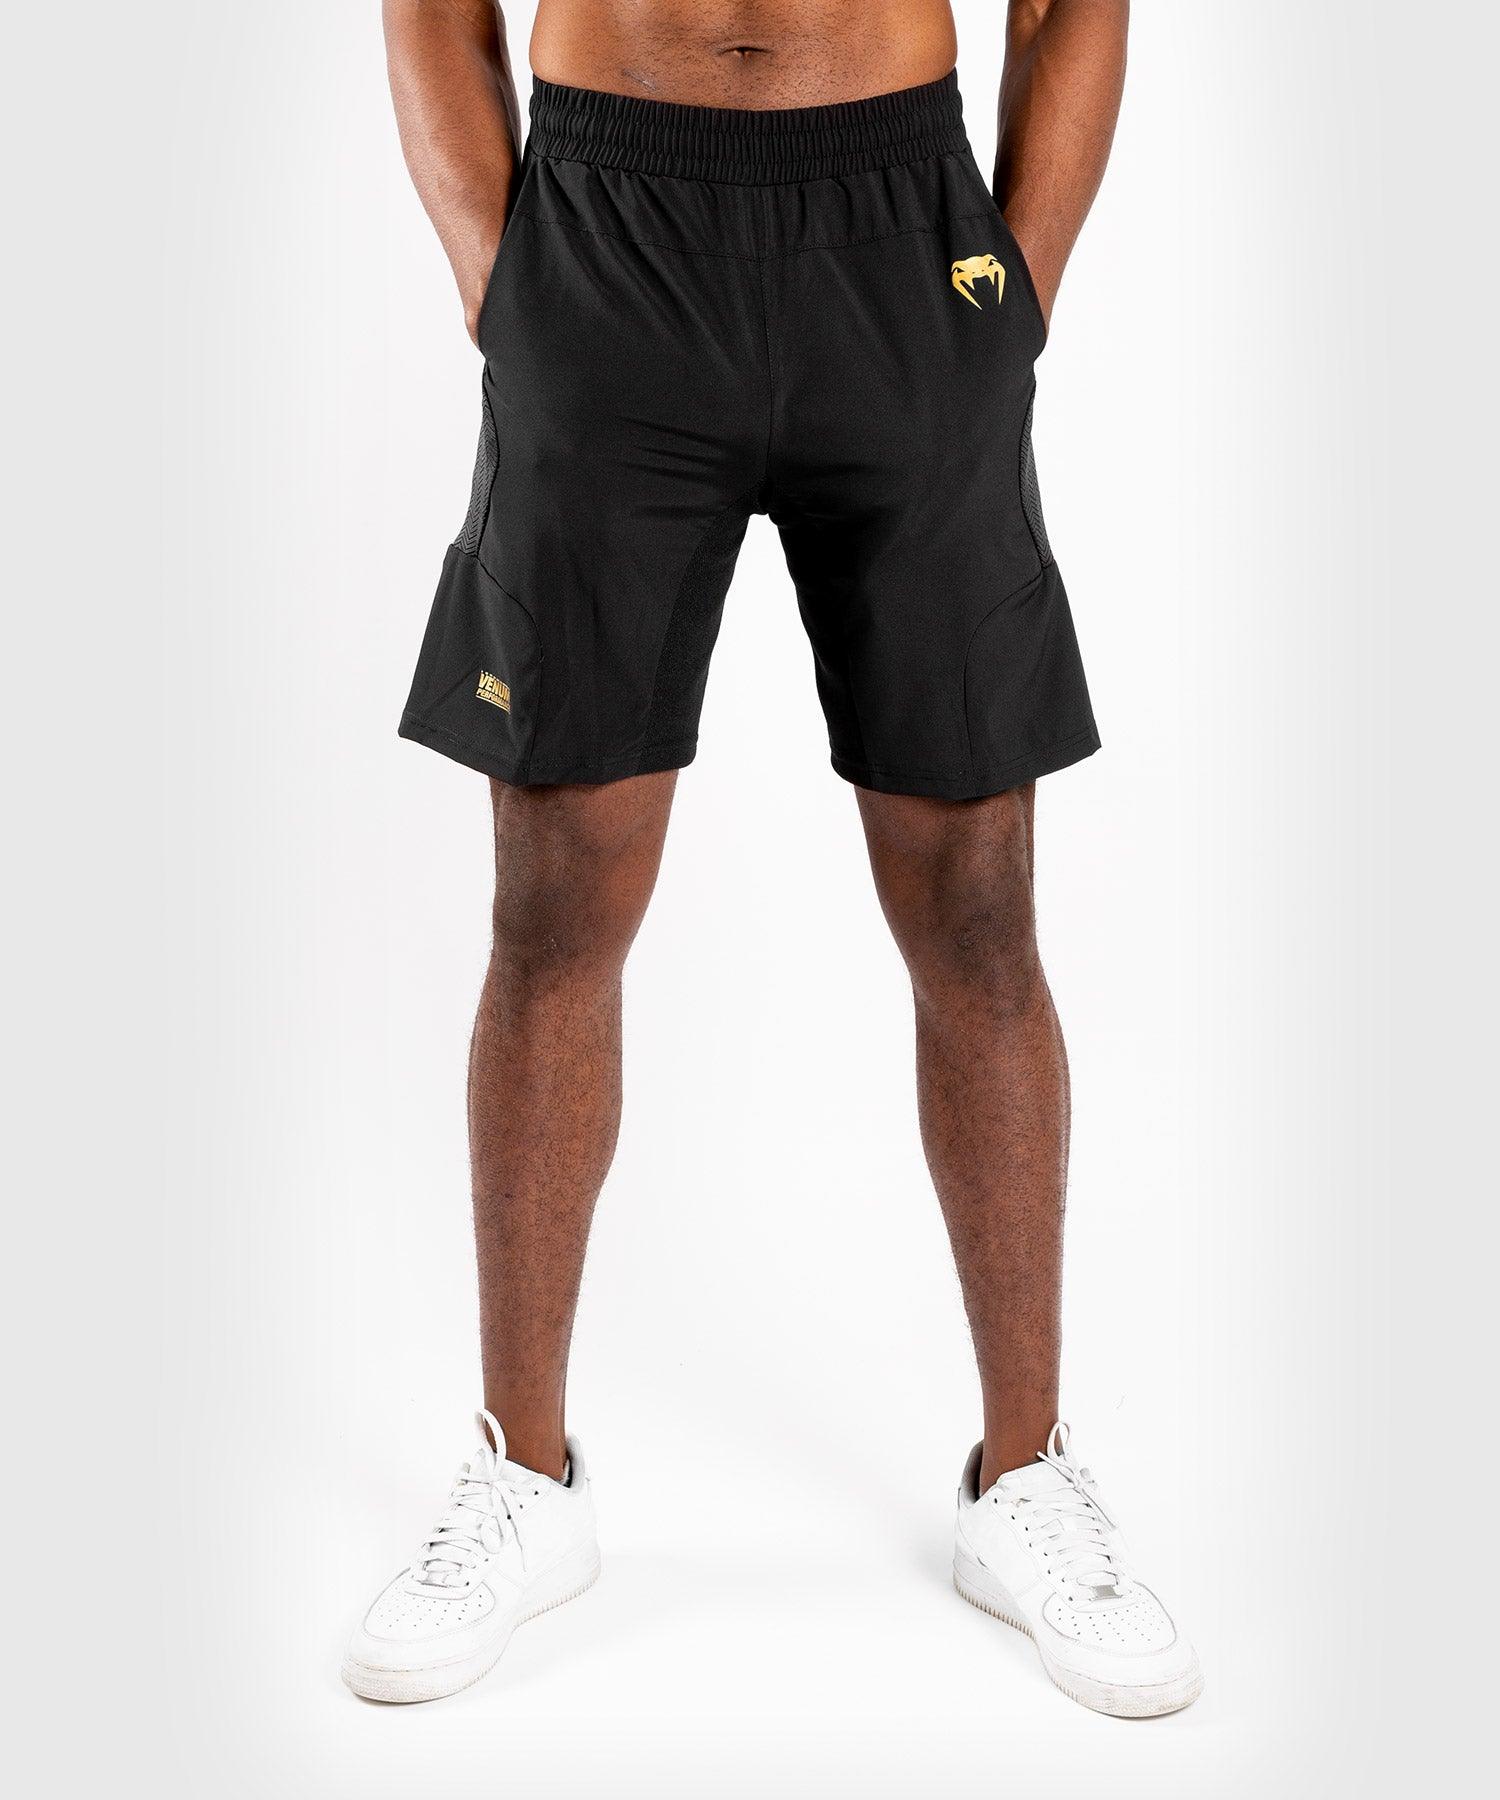 Venum G-Fit Training Shorts - Black/Gold Picture 1